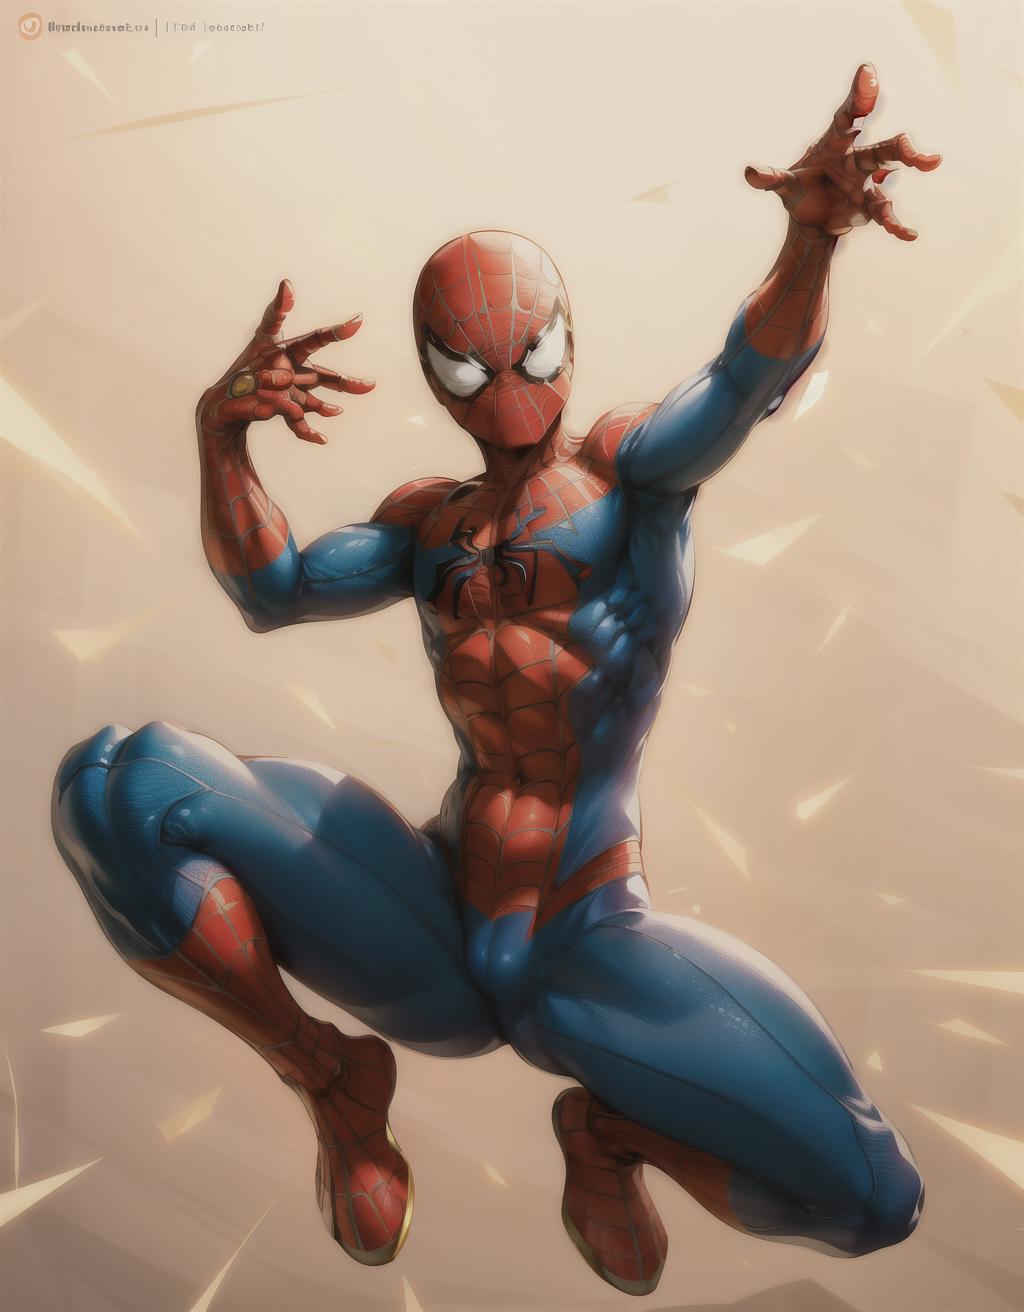 SpidermanClasic_v1.0 image by terawatt